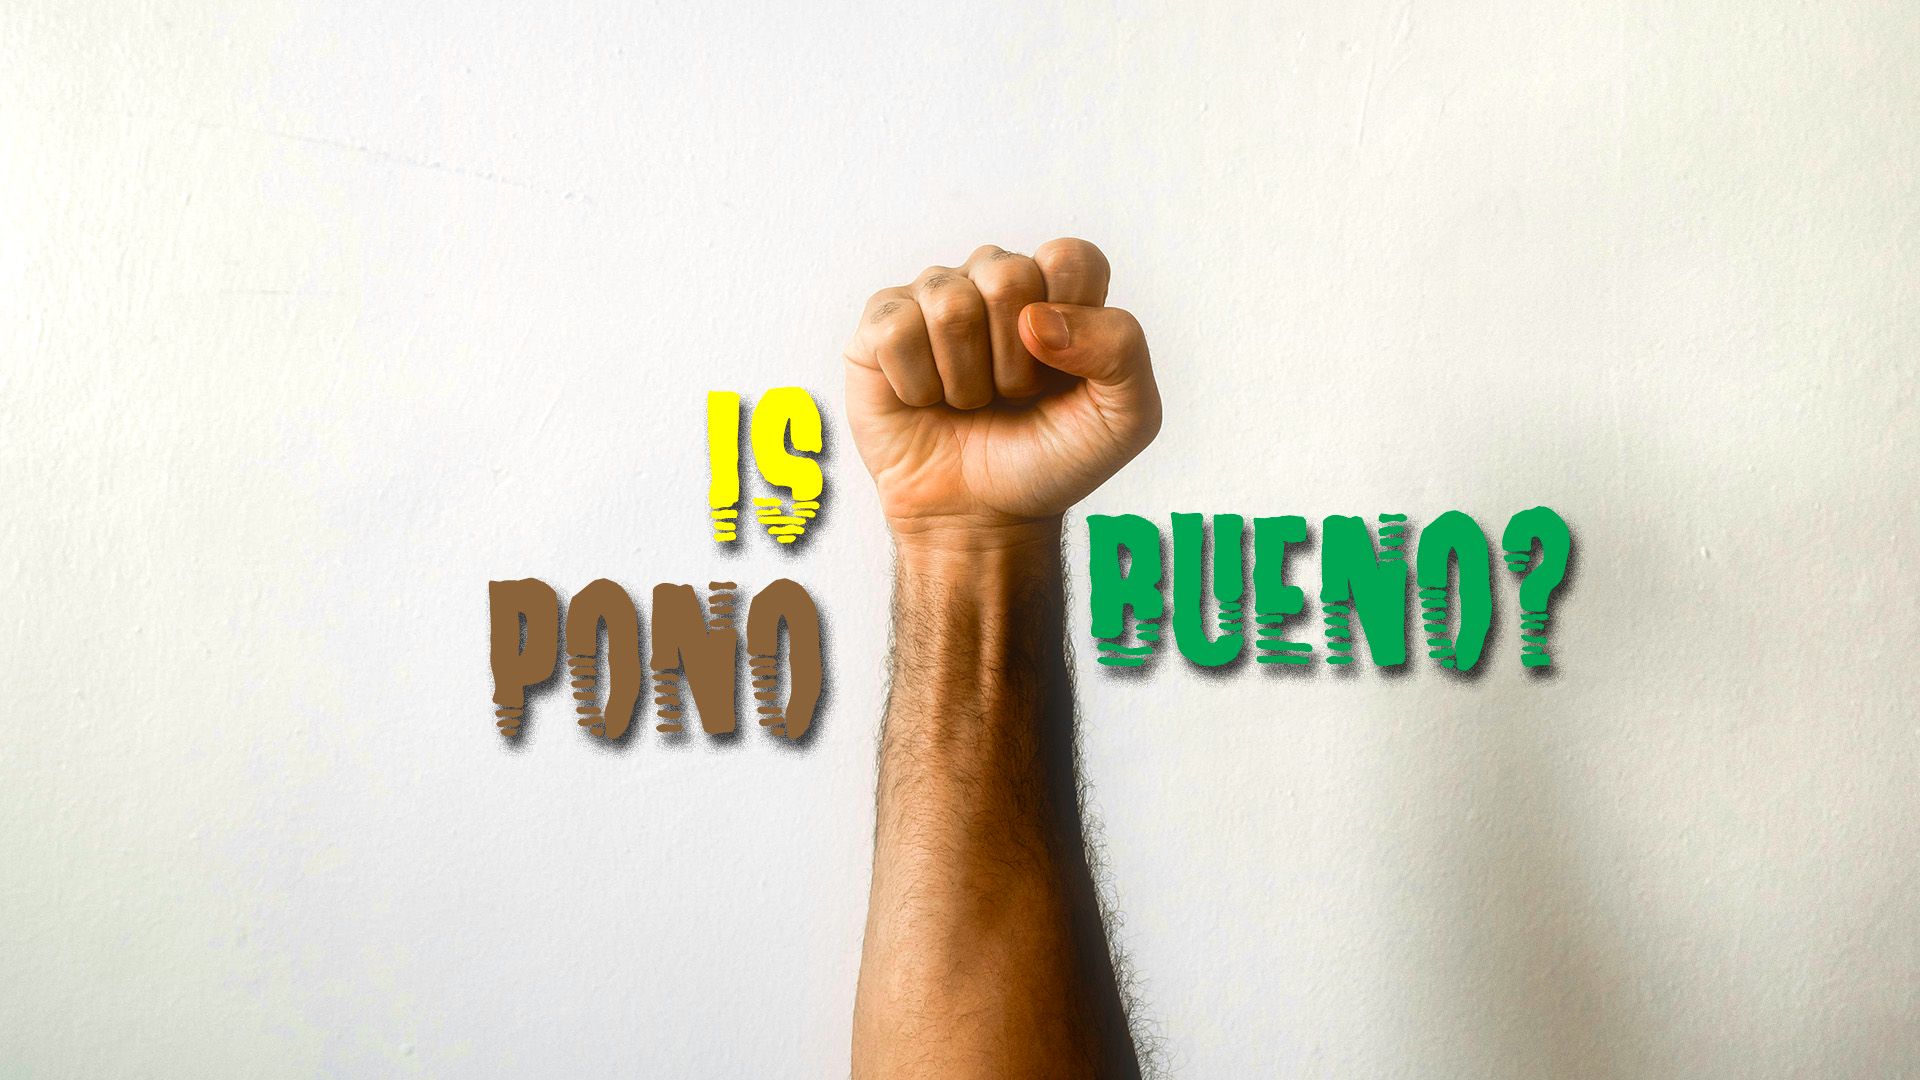 Is/Was Pono Bueno?